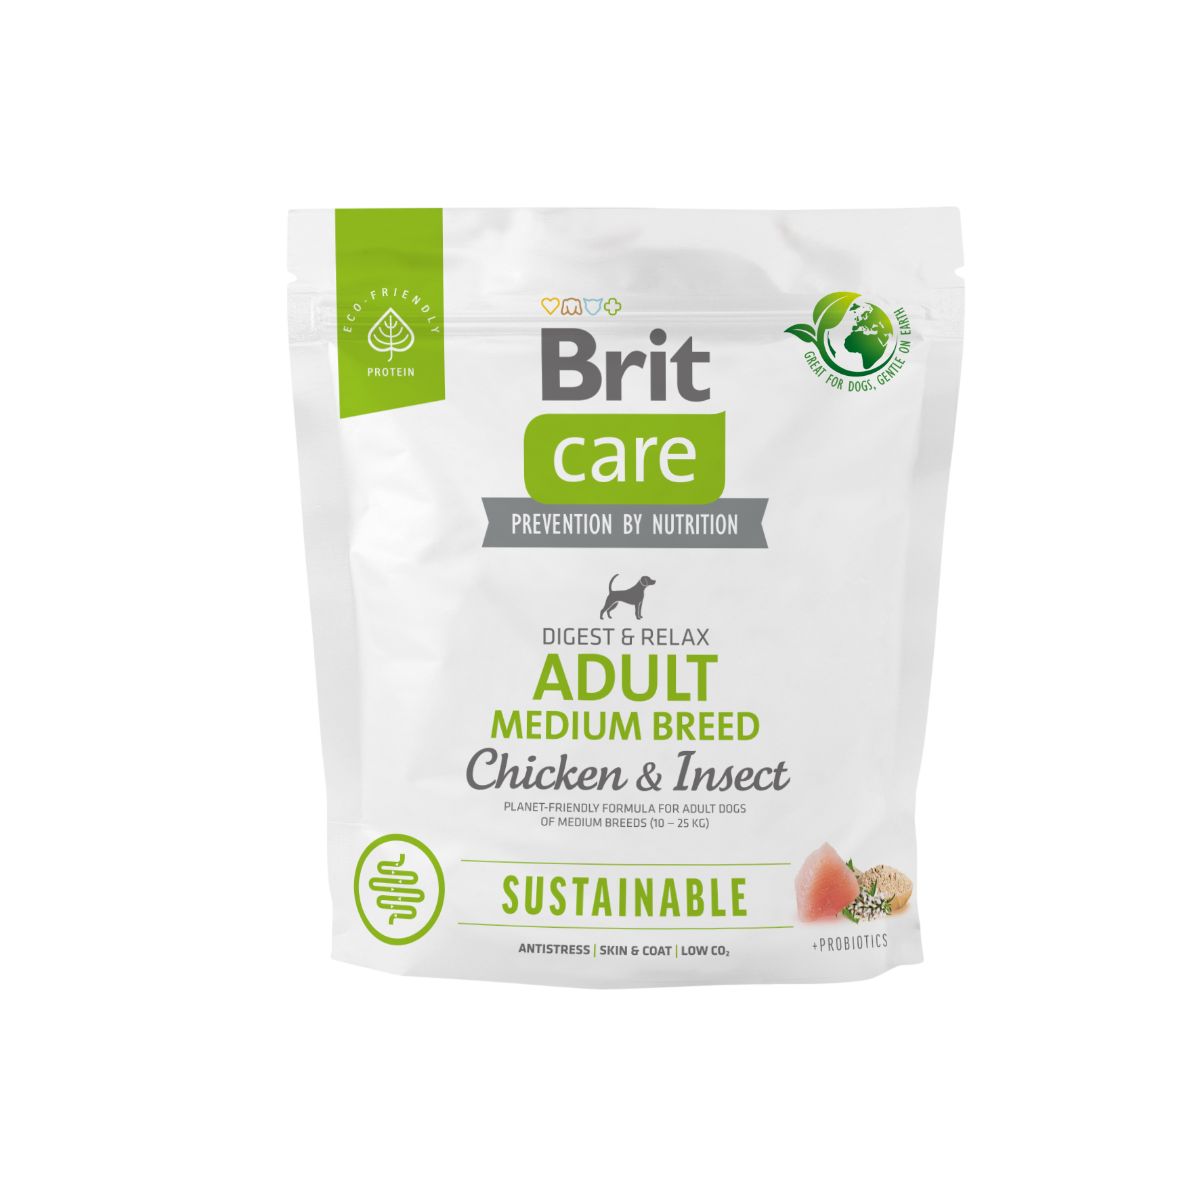 Brit Care – Sustainable – Adult Medium Breed-4